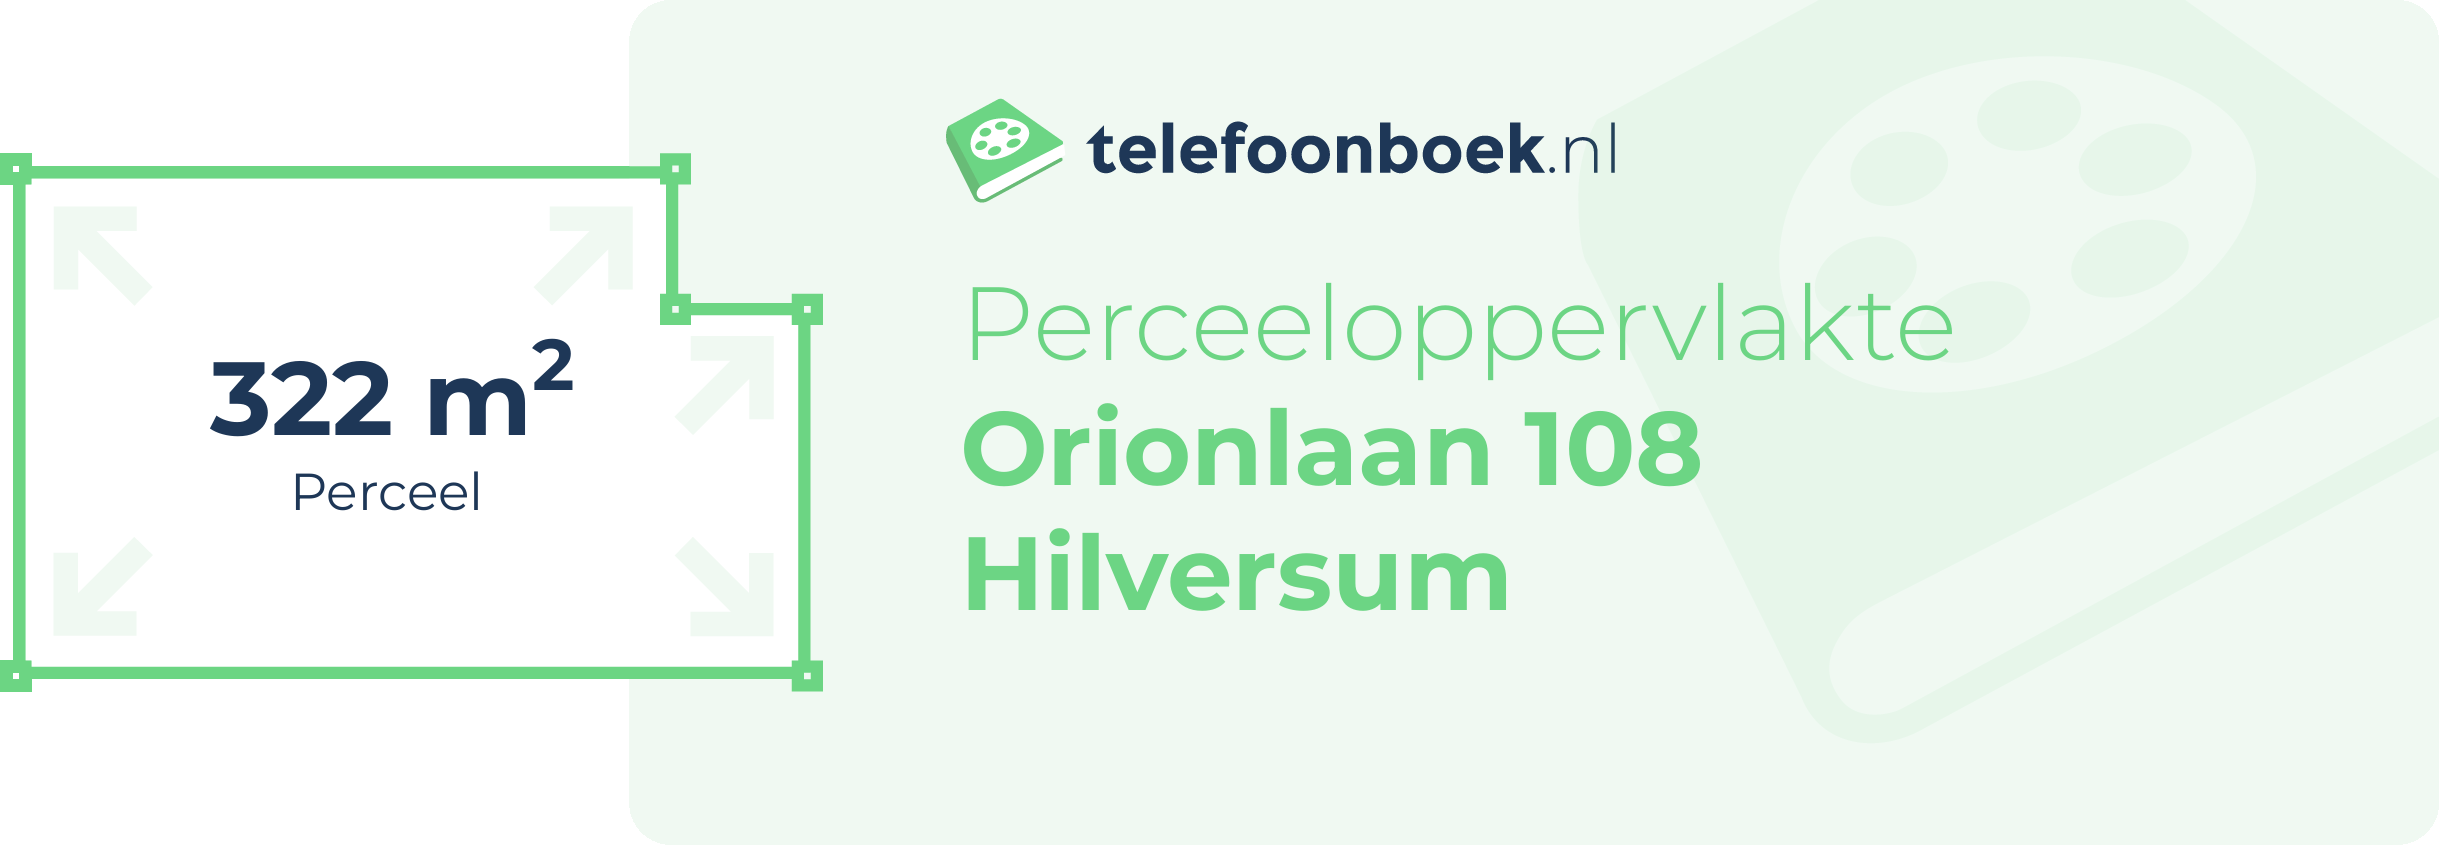 Perceeloppervlakte Orionlaan 108 Hilversum